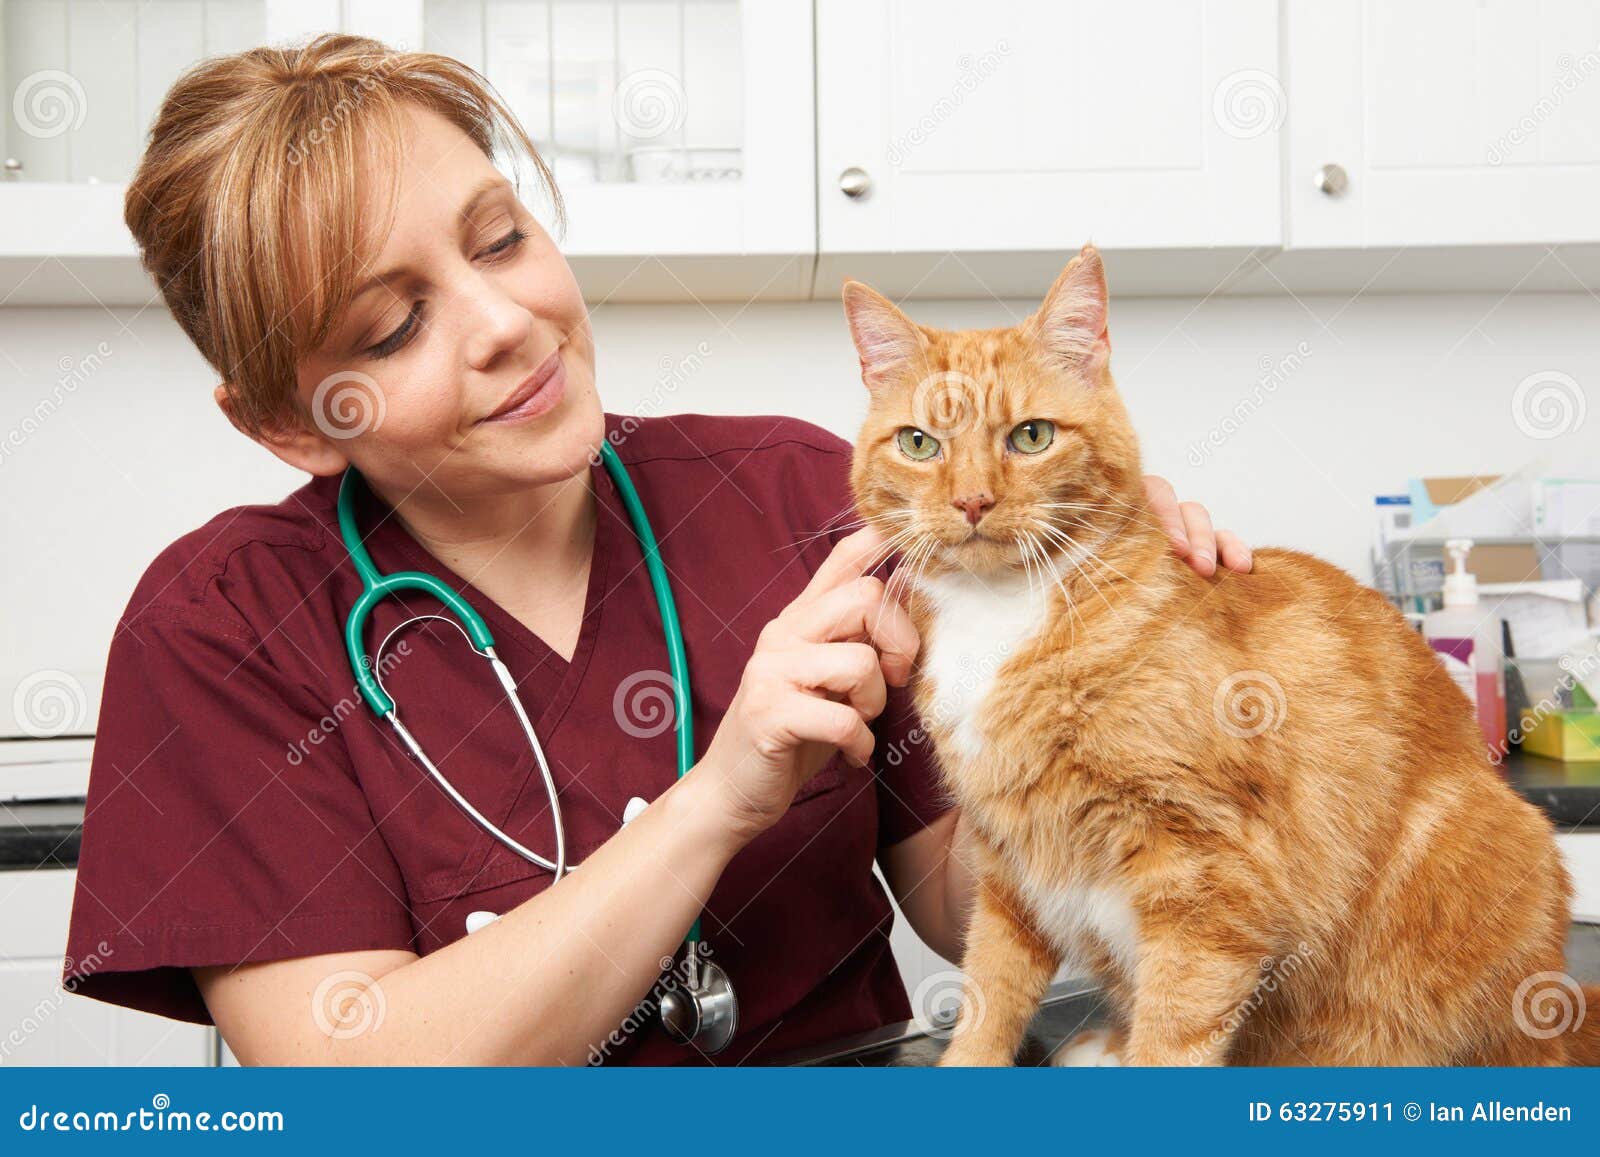 veterinary nurse examining cat in surgery